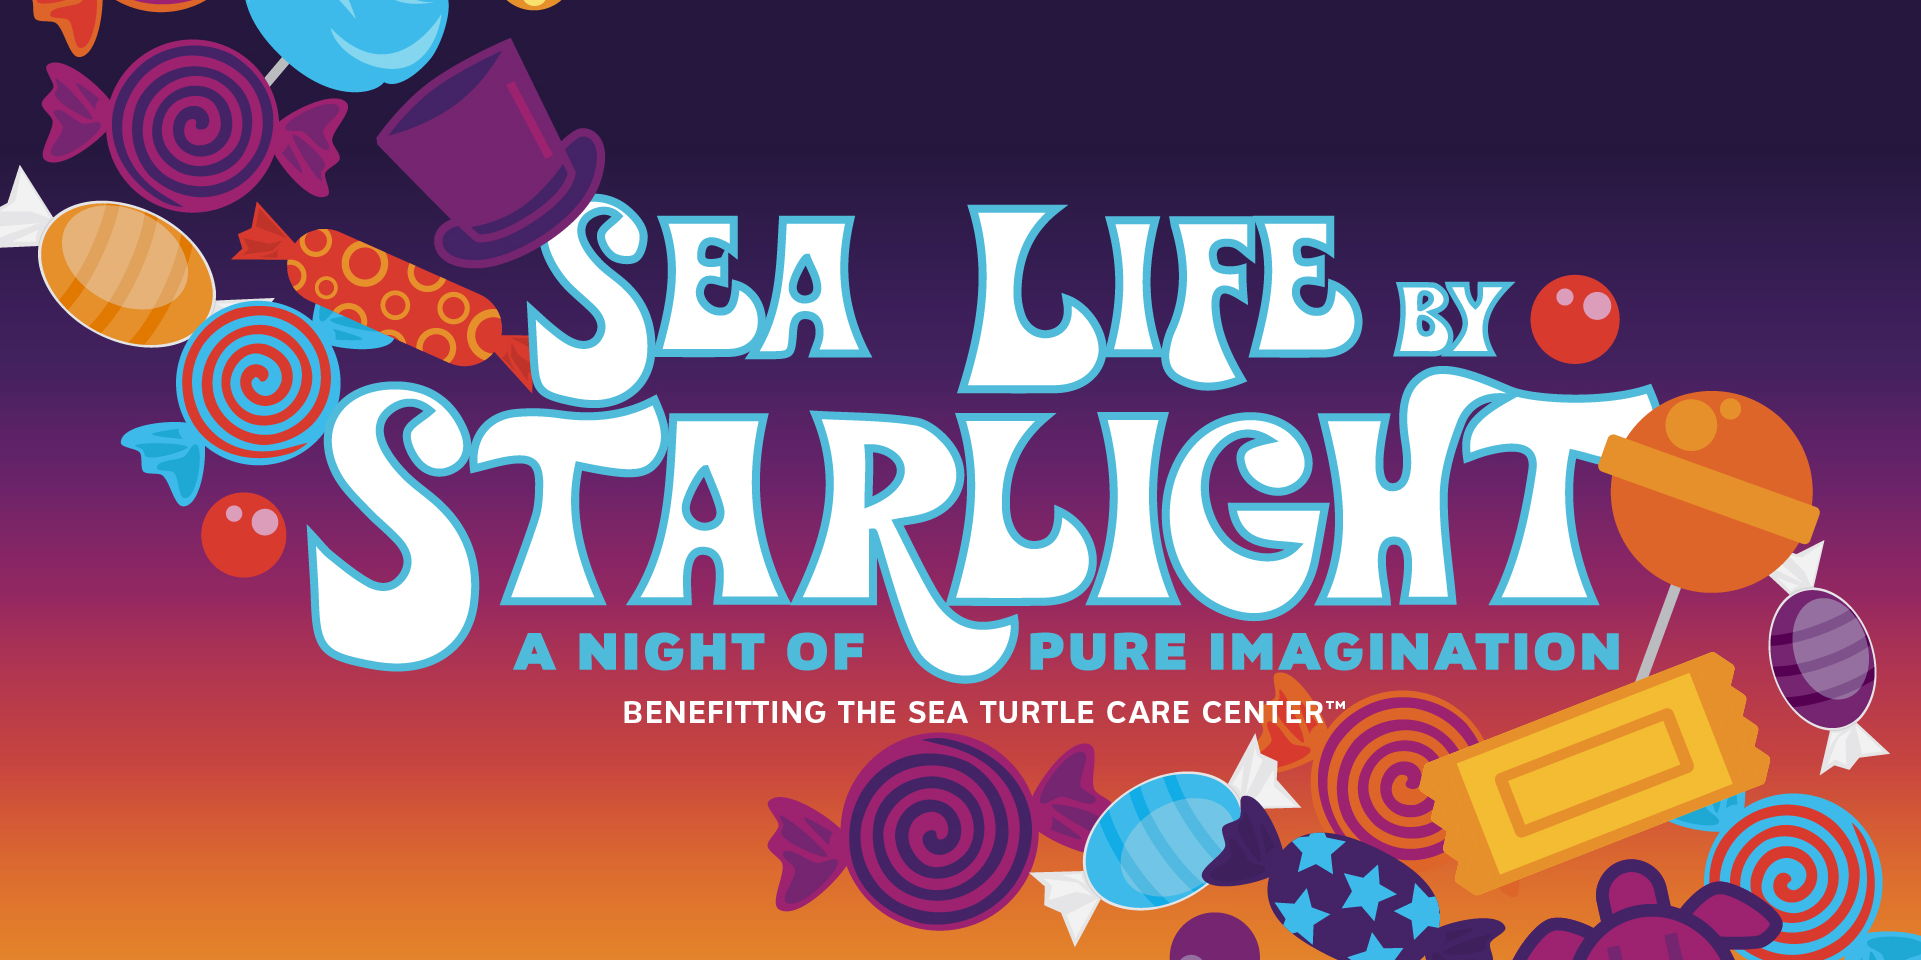 Sea Life by Starlight at the South Carolina Aquarium promotional image